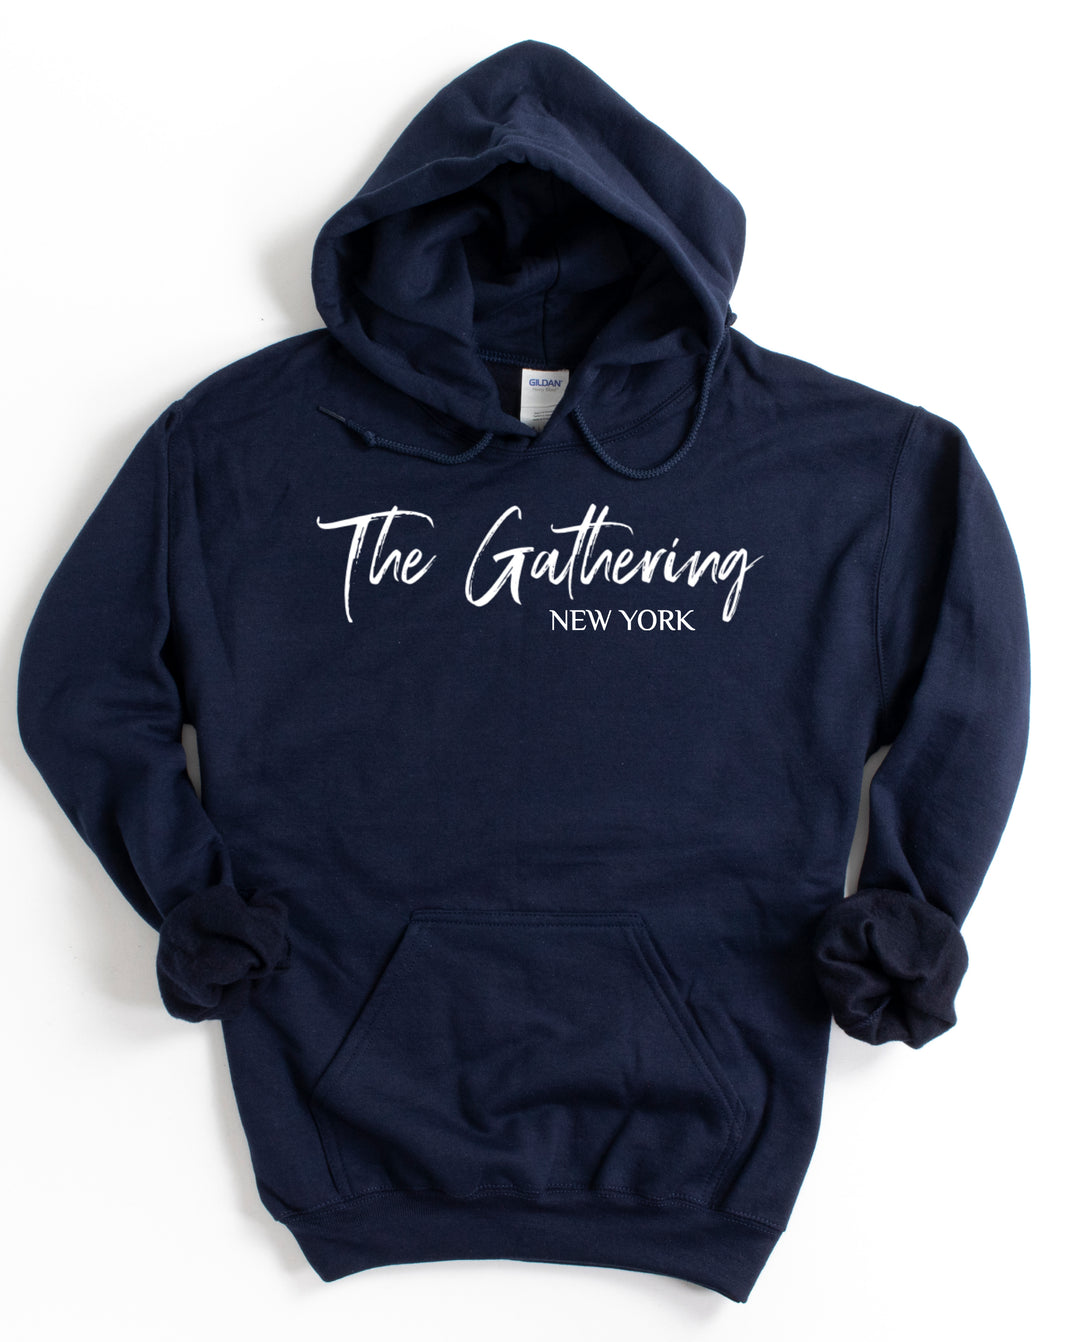 The Gathering New York - Unisex Hoodie Sweatshirt - Joy & Country